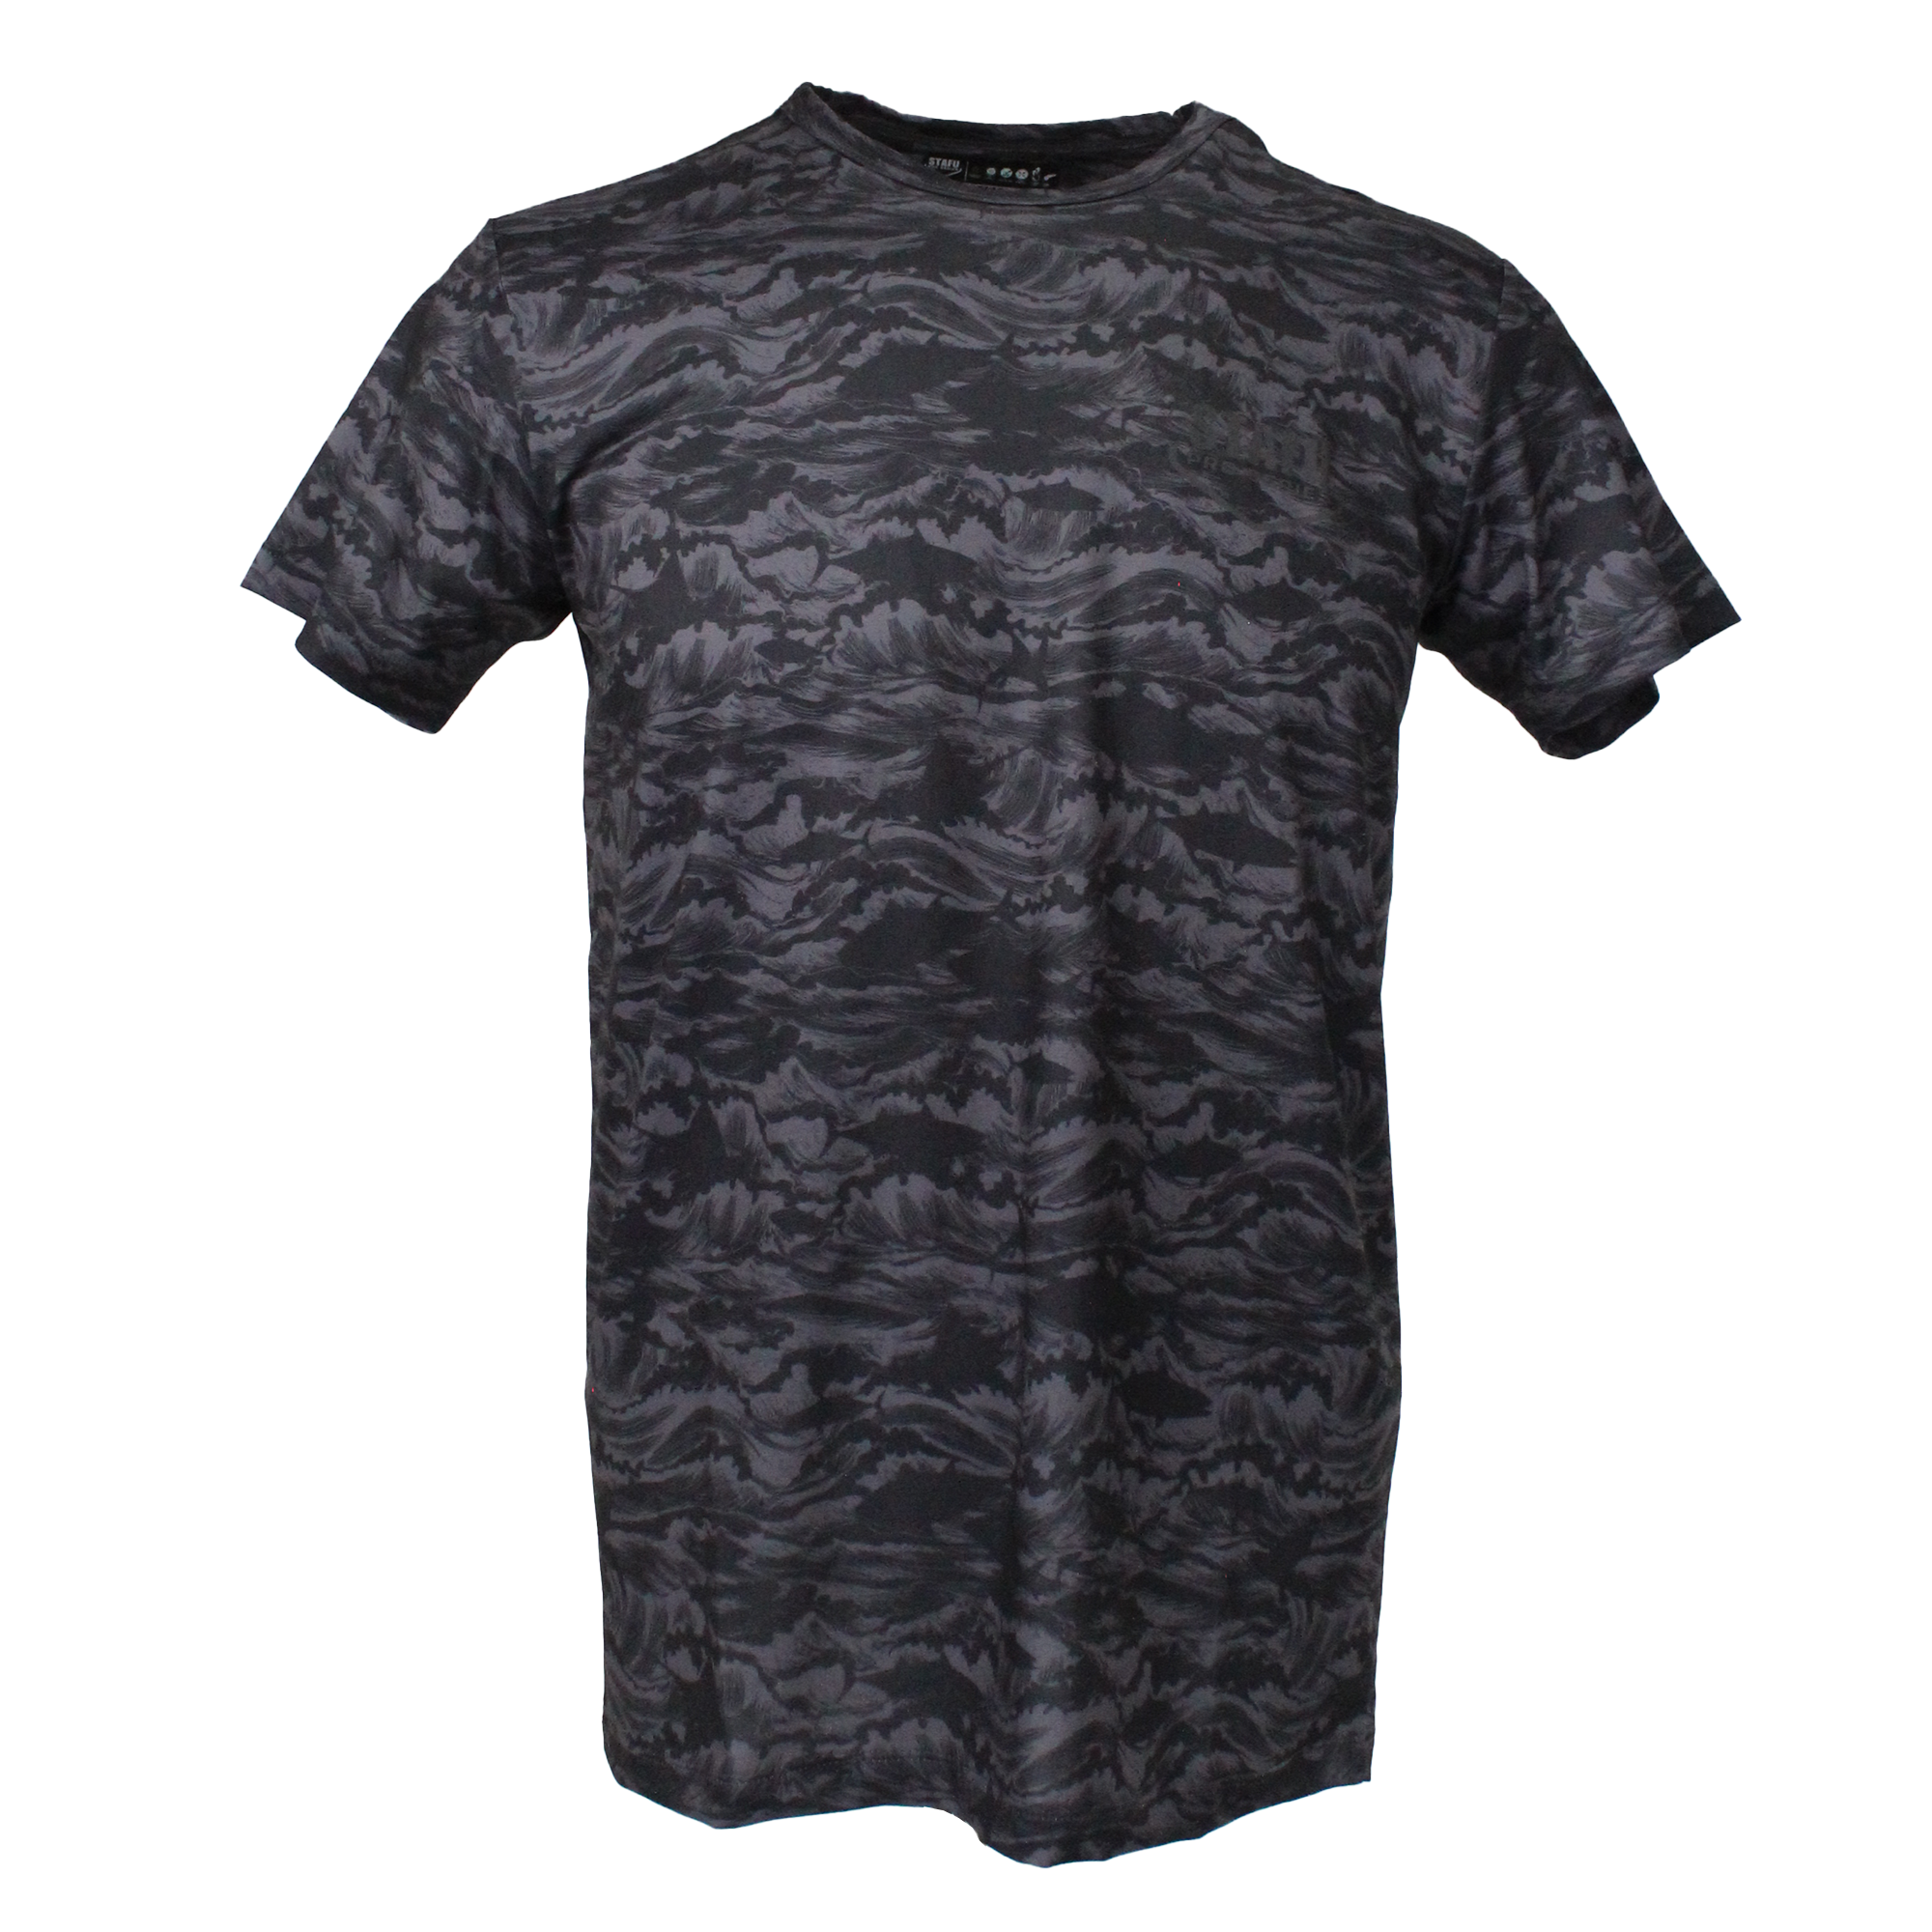 .99 Short Sleeve Ultra Light Performance T-Shirt - Signature - Black